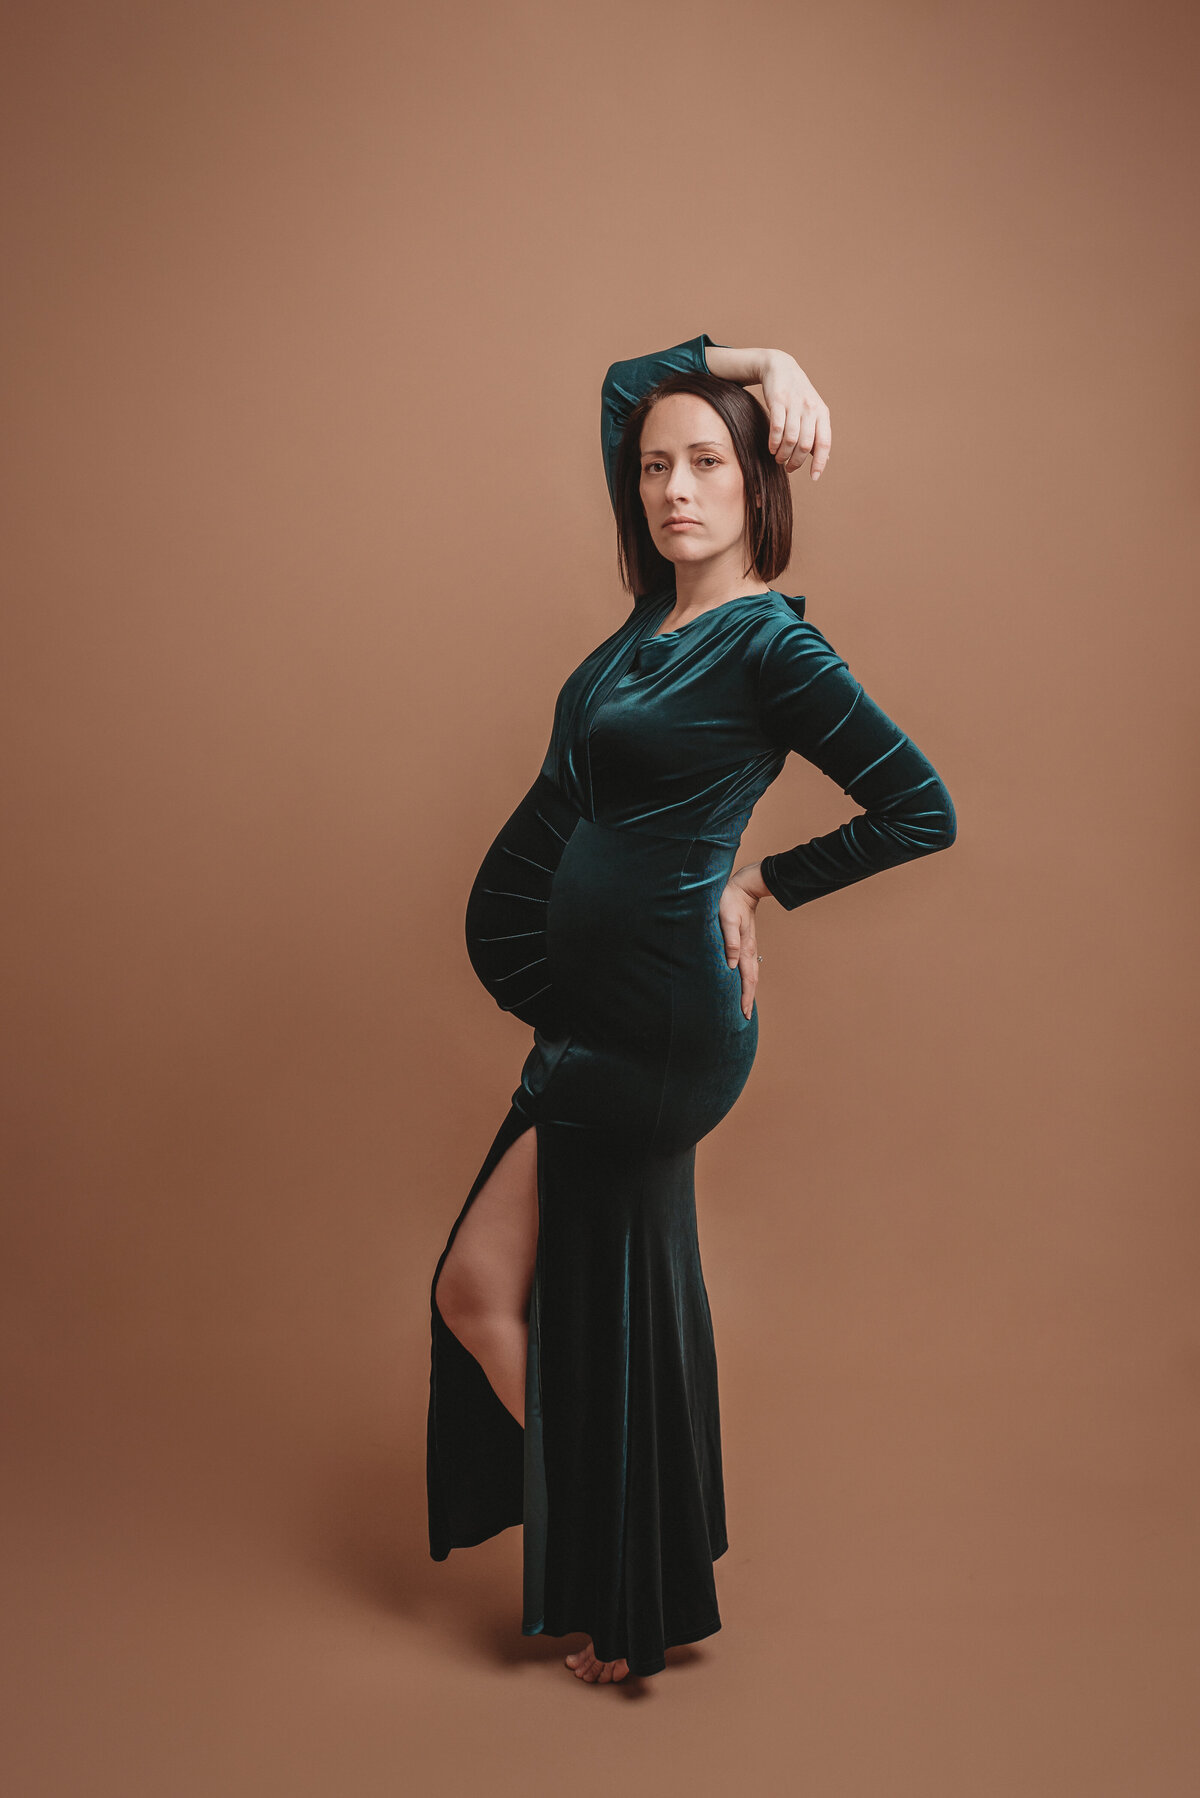 30 weeks pregnant woman wearing green velvet maternity dress posing for portraits